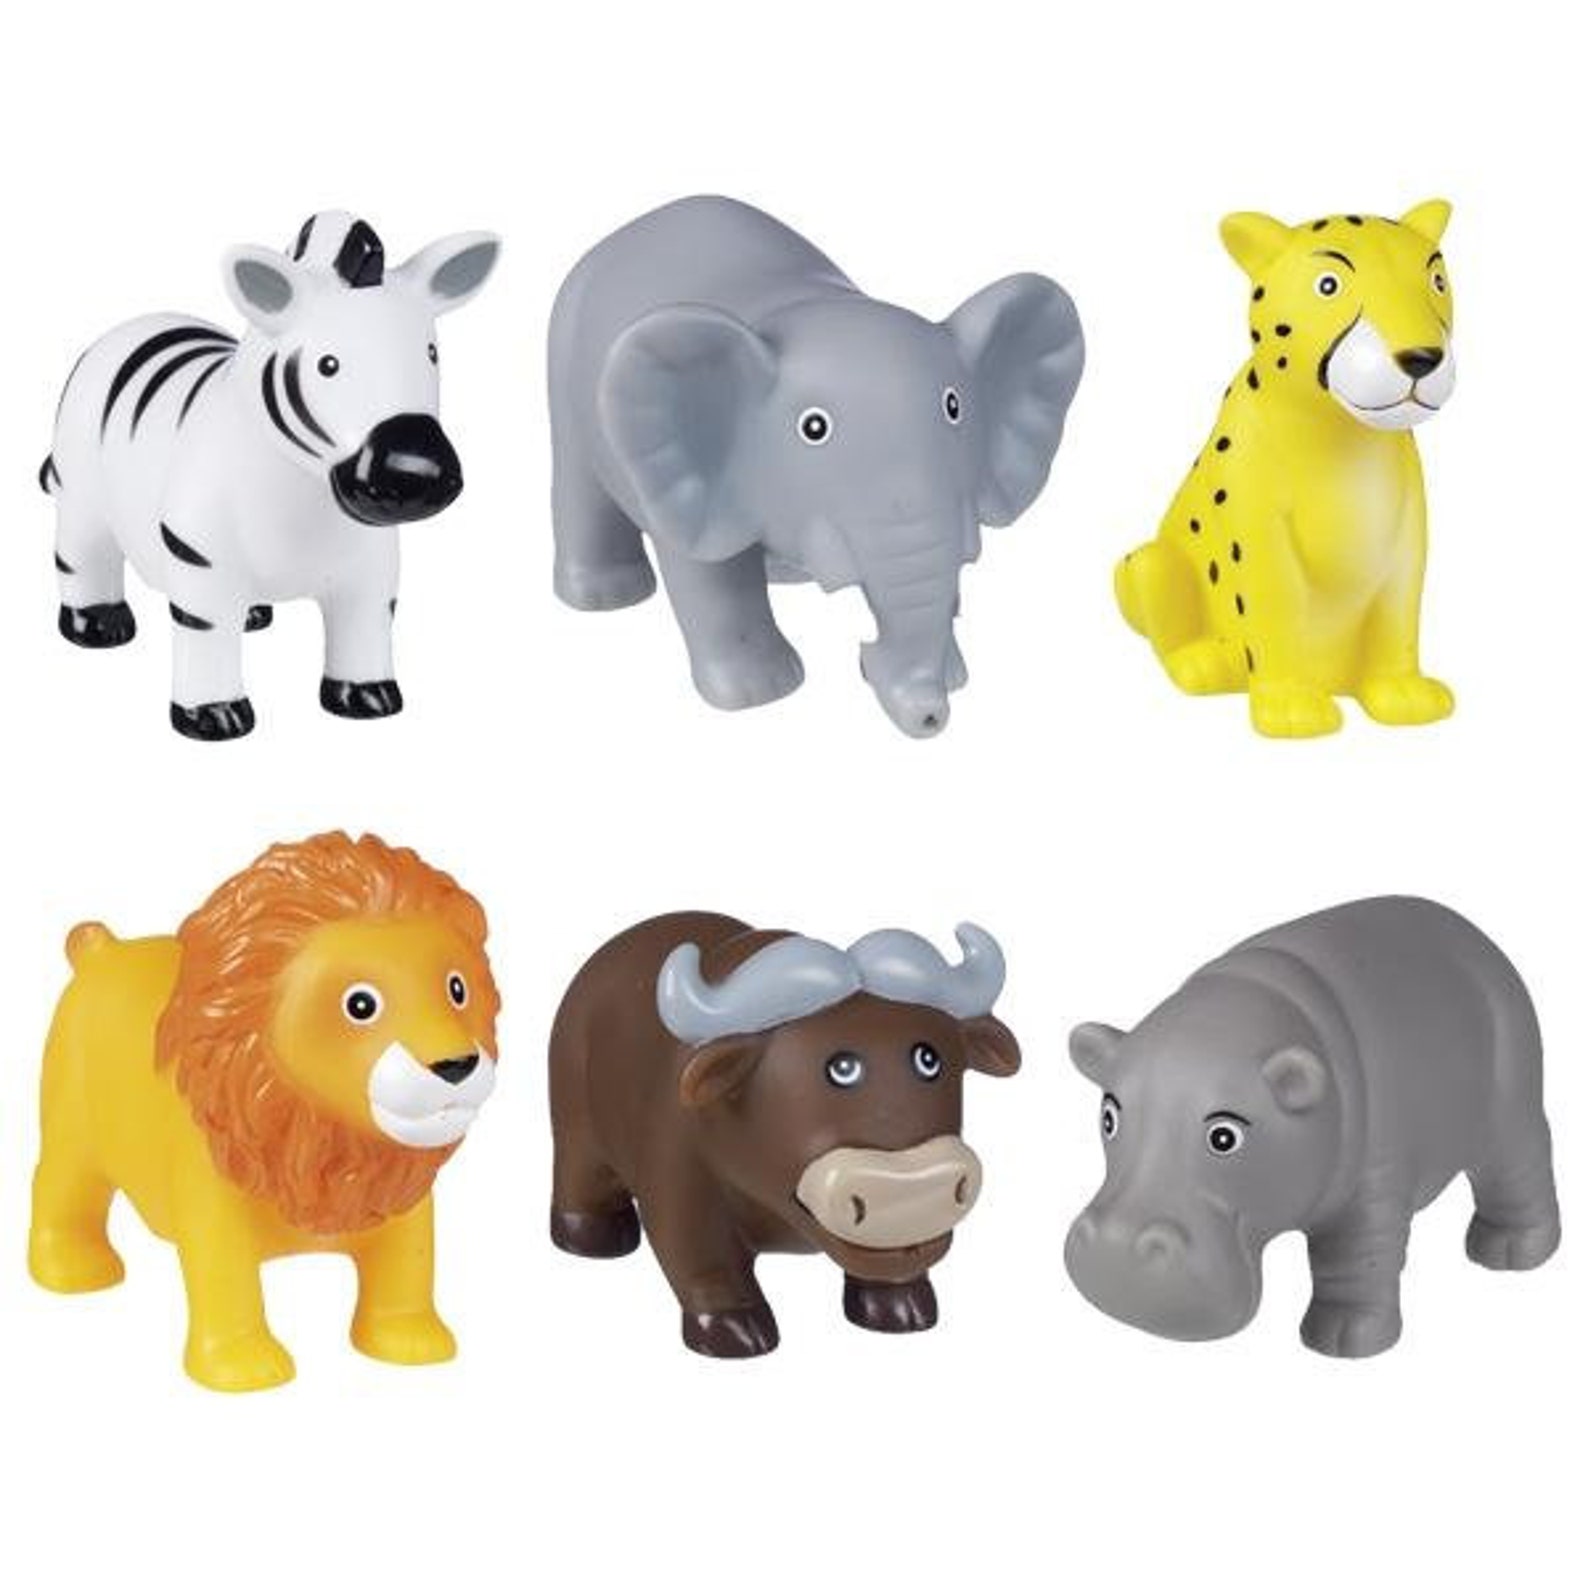 Игрушку animals. Резиновые игрушки для детей. Резиновые животные. Игрушки животные. Резиновые игрушки для детей животные.